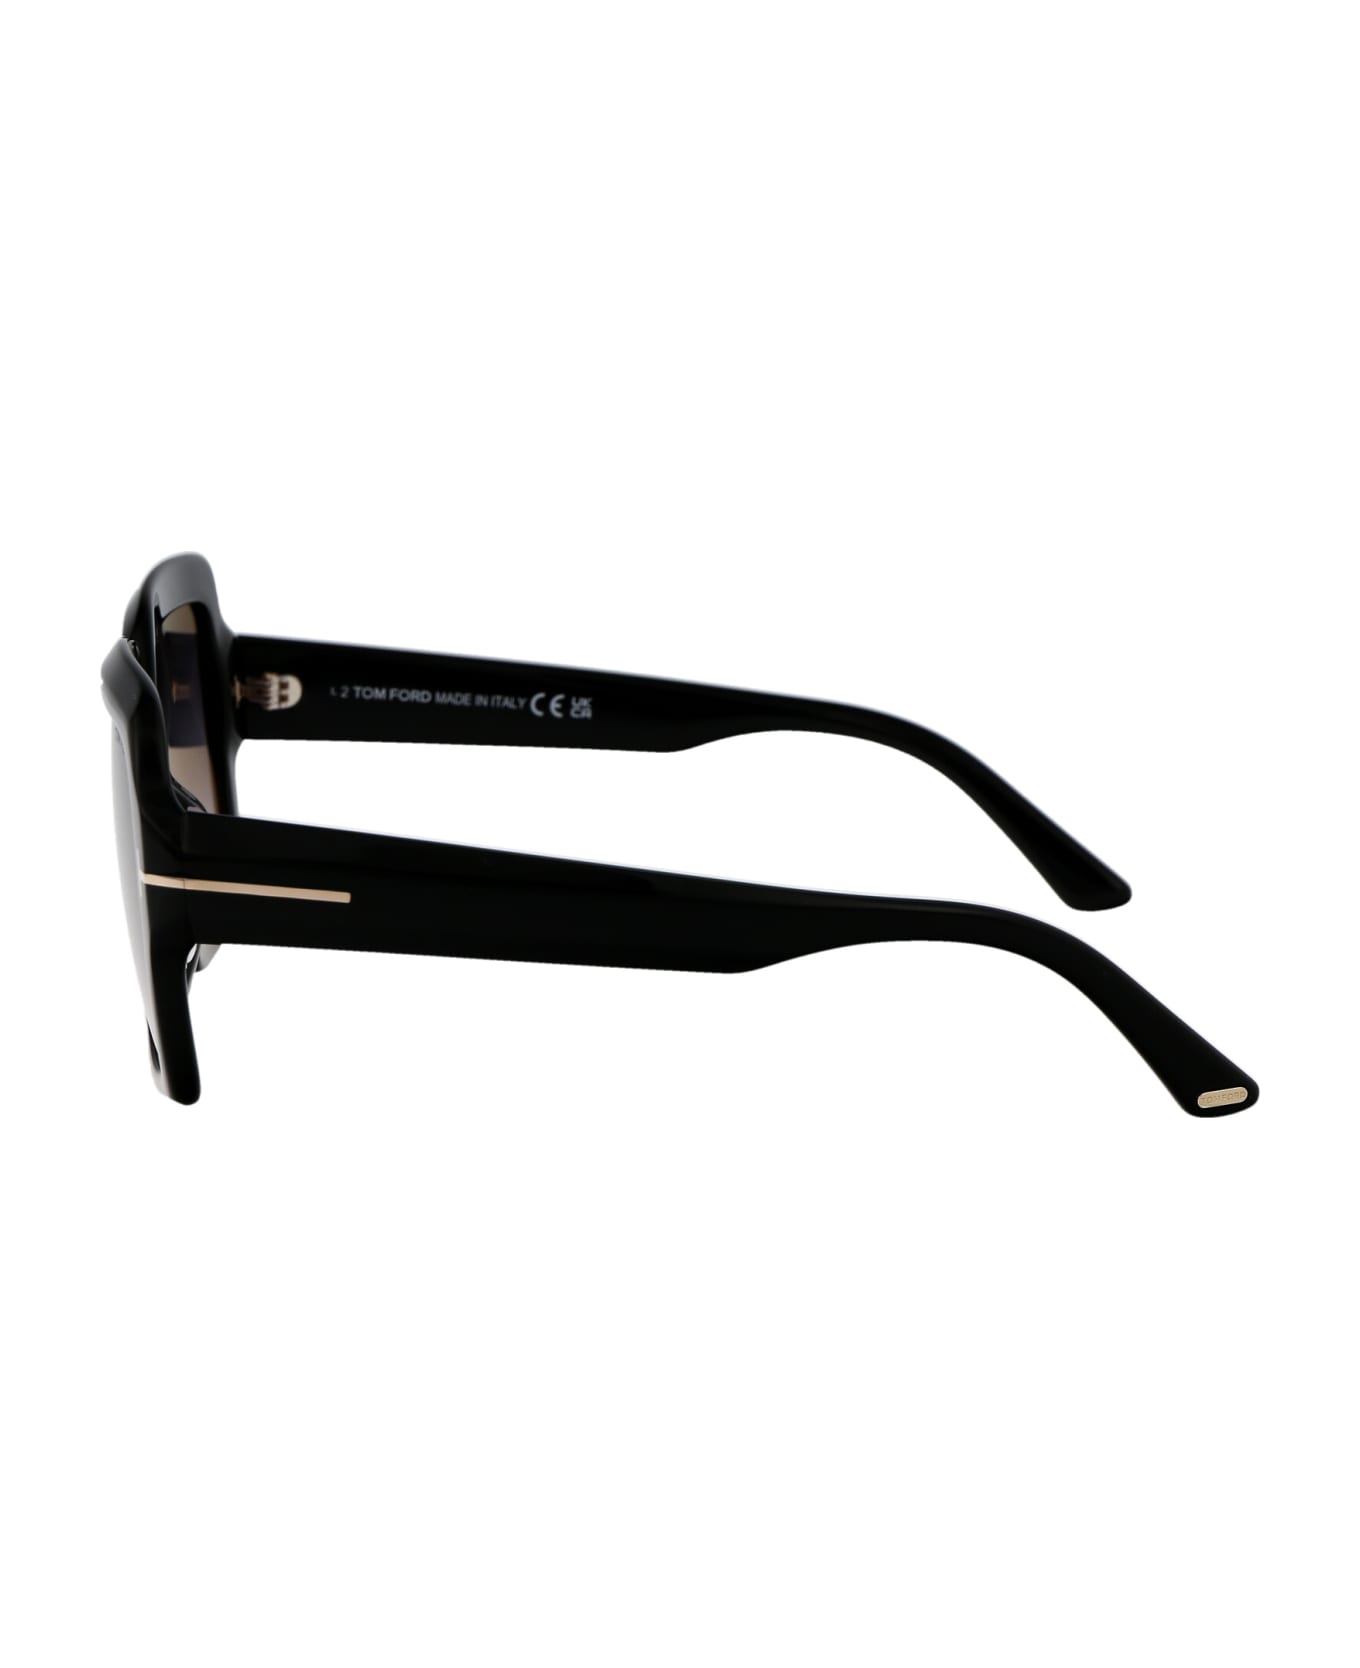 Tom Ford Eyewear Kaya Sunglasses - 01B Nero Lucido / Fumo Grad サングラス